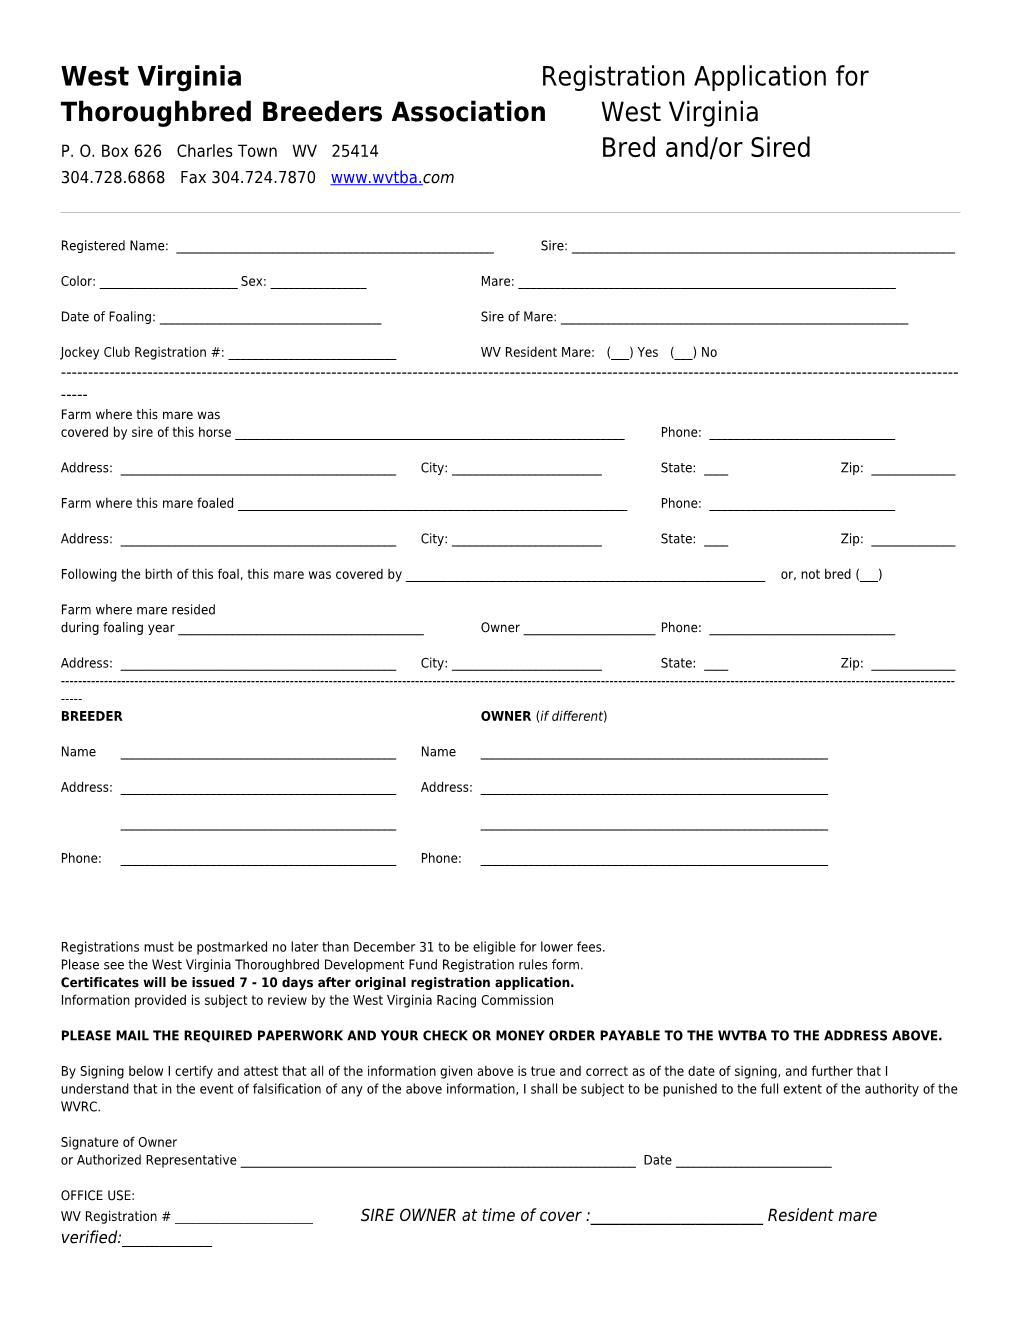 West Virginia Registration Application For